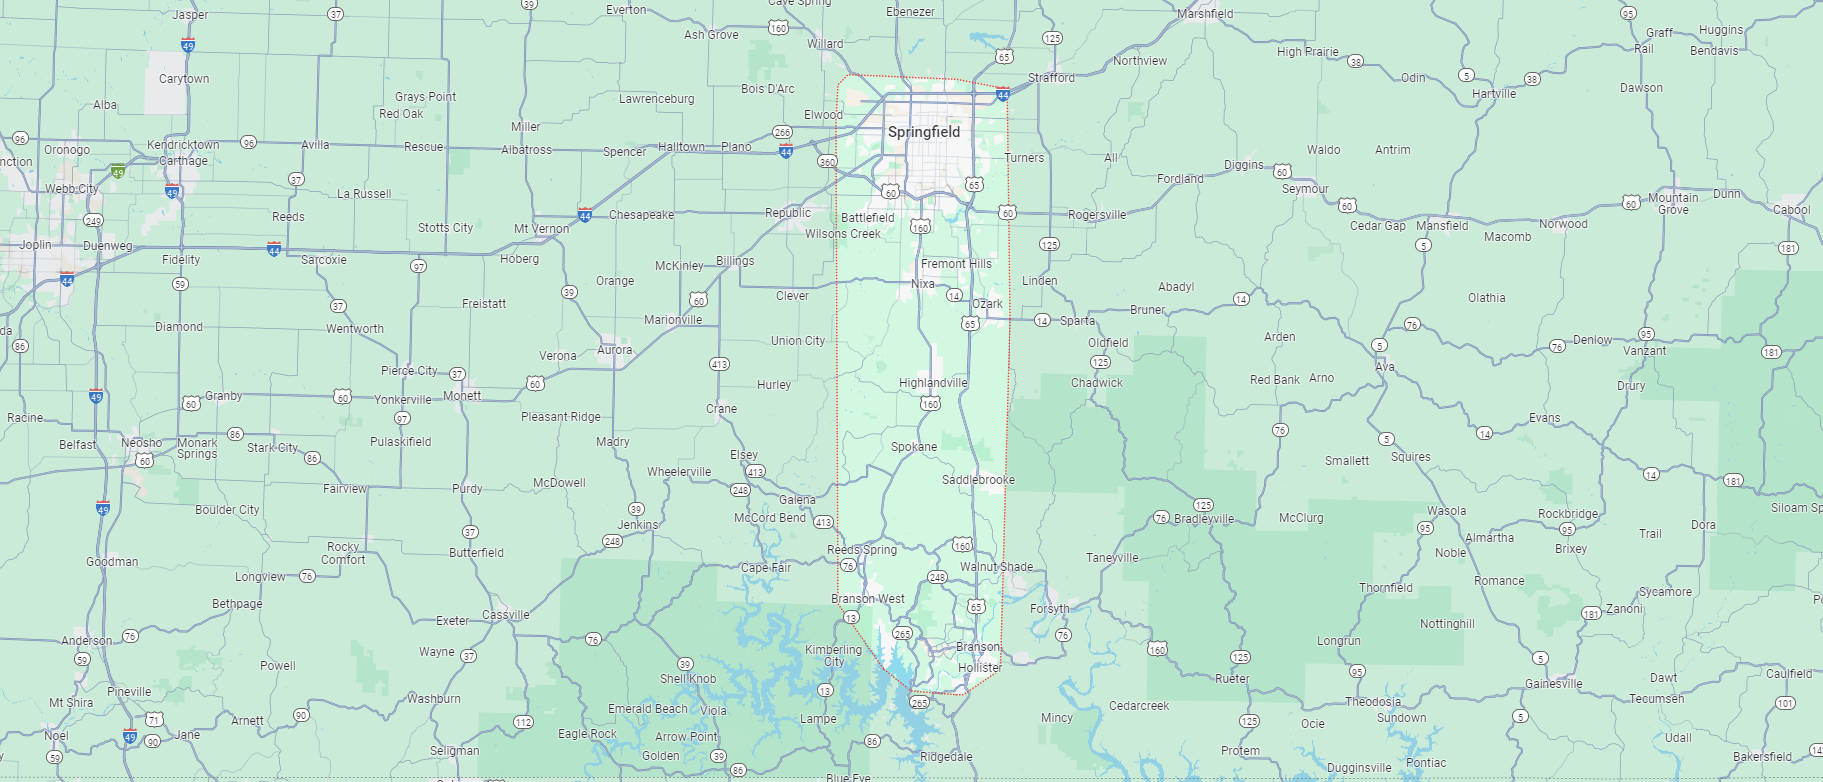 Google Maps placeholder image